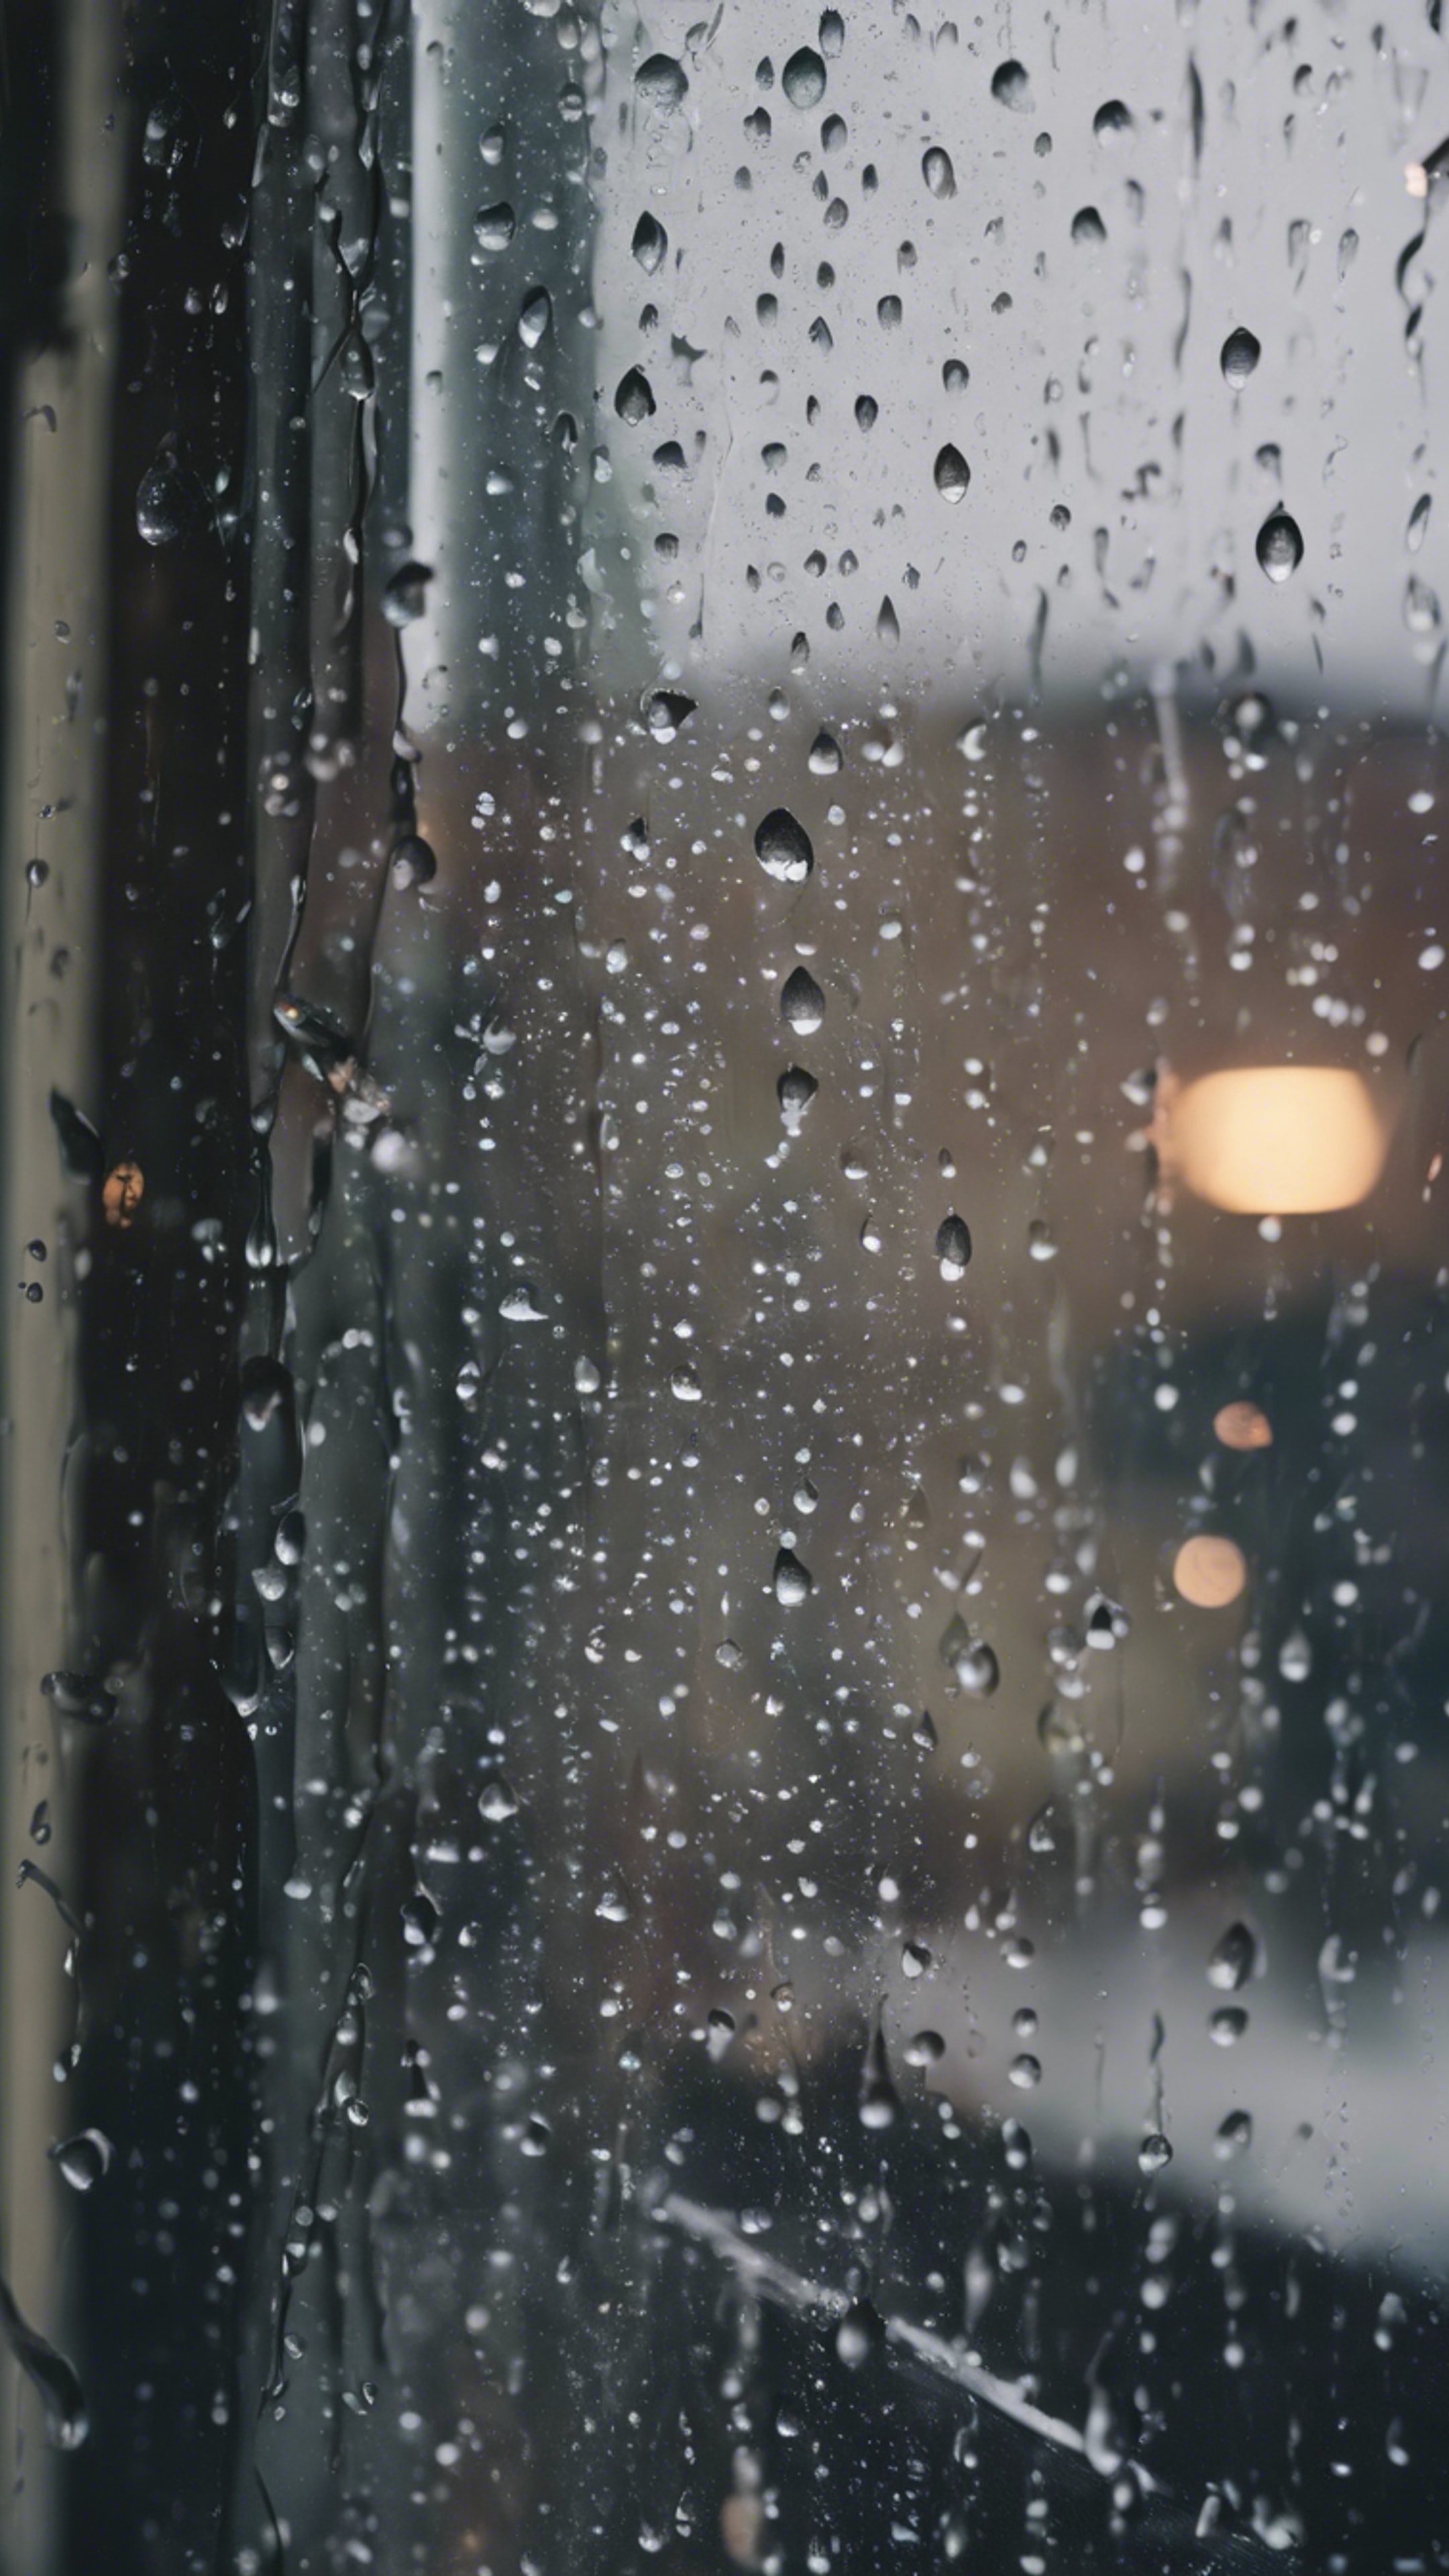 A heavy rainstorm viewed through a window, the droplets streaking down the glass壁紙[548369da7c5b4ee9bdb0]